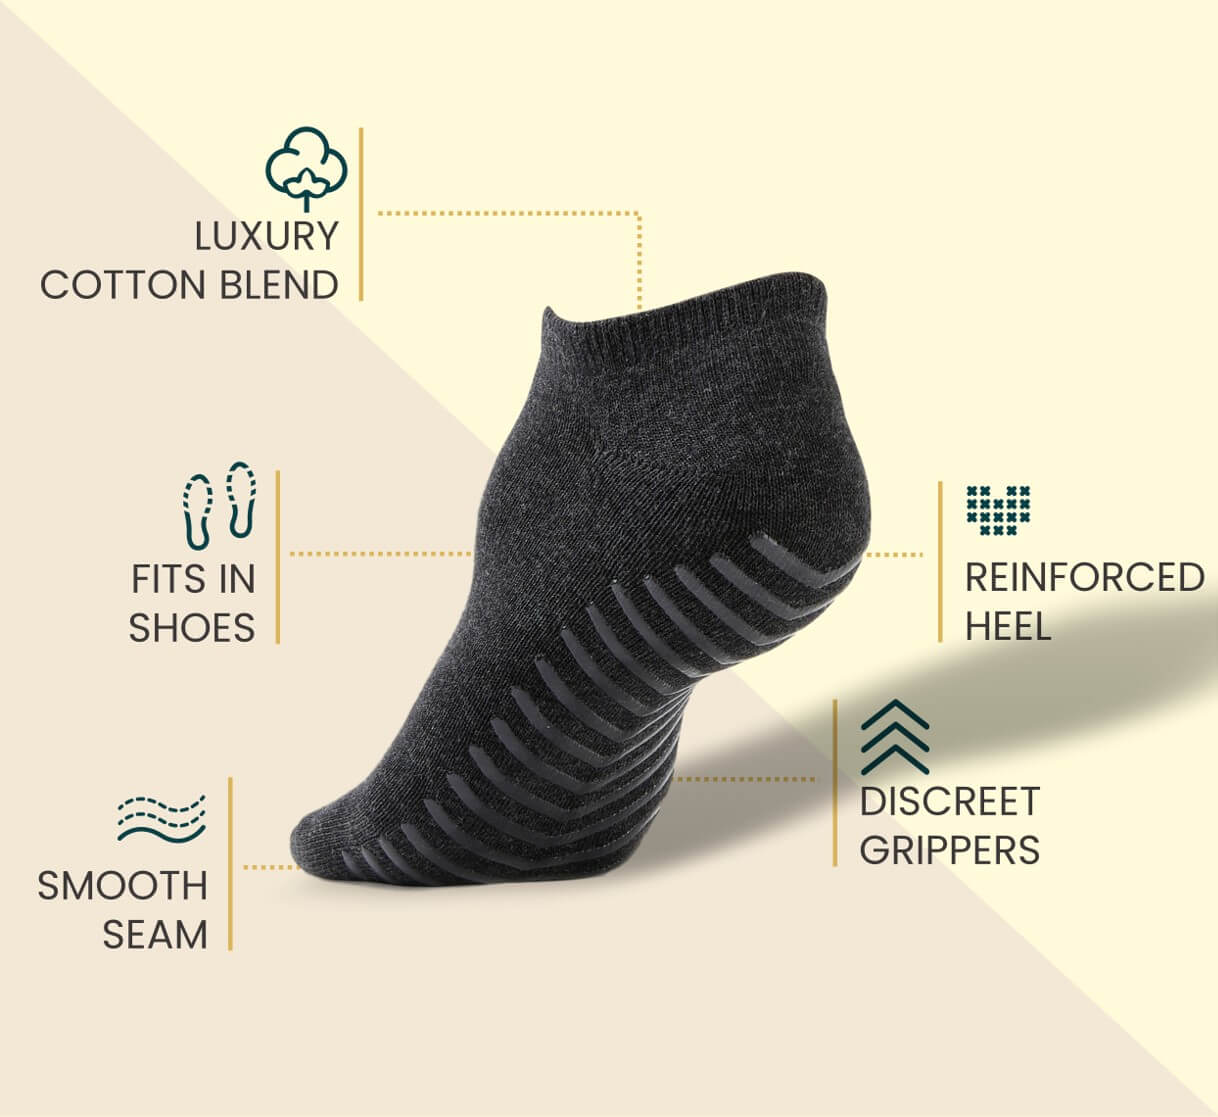 Grip socks for everyday wear | Best non 